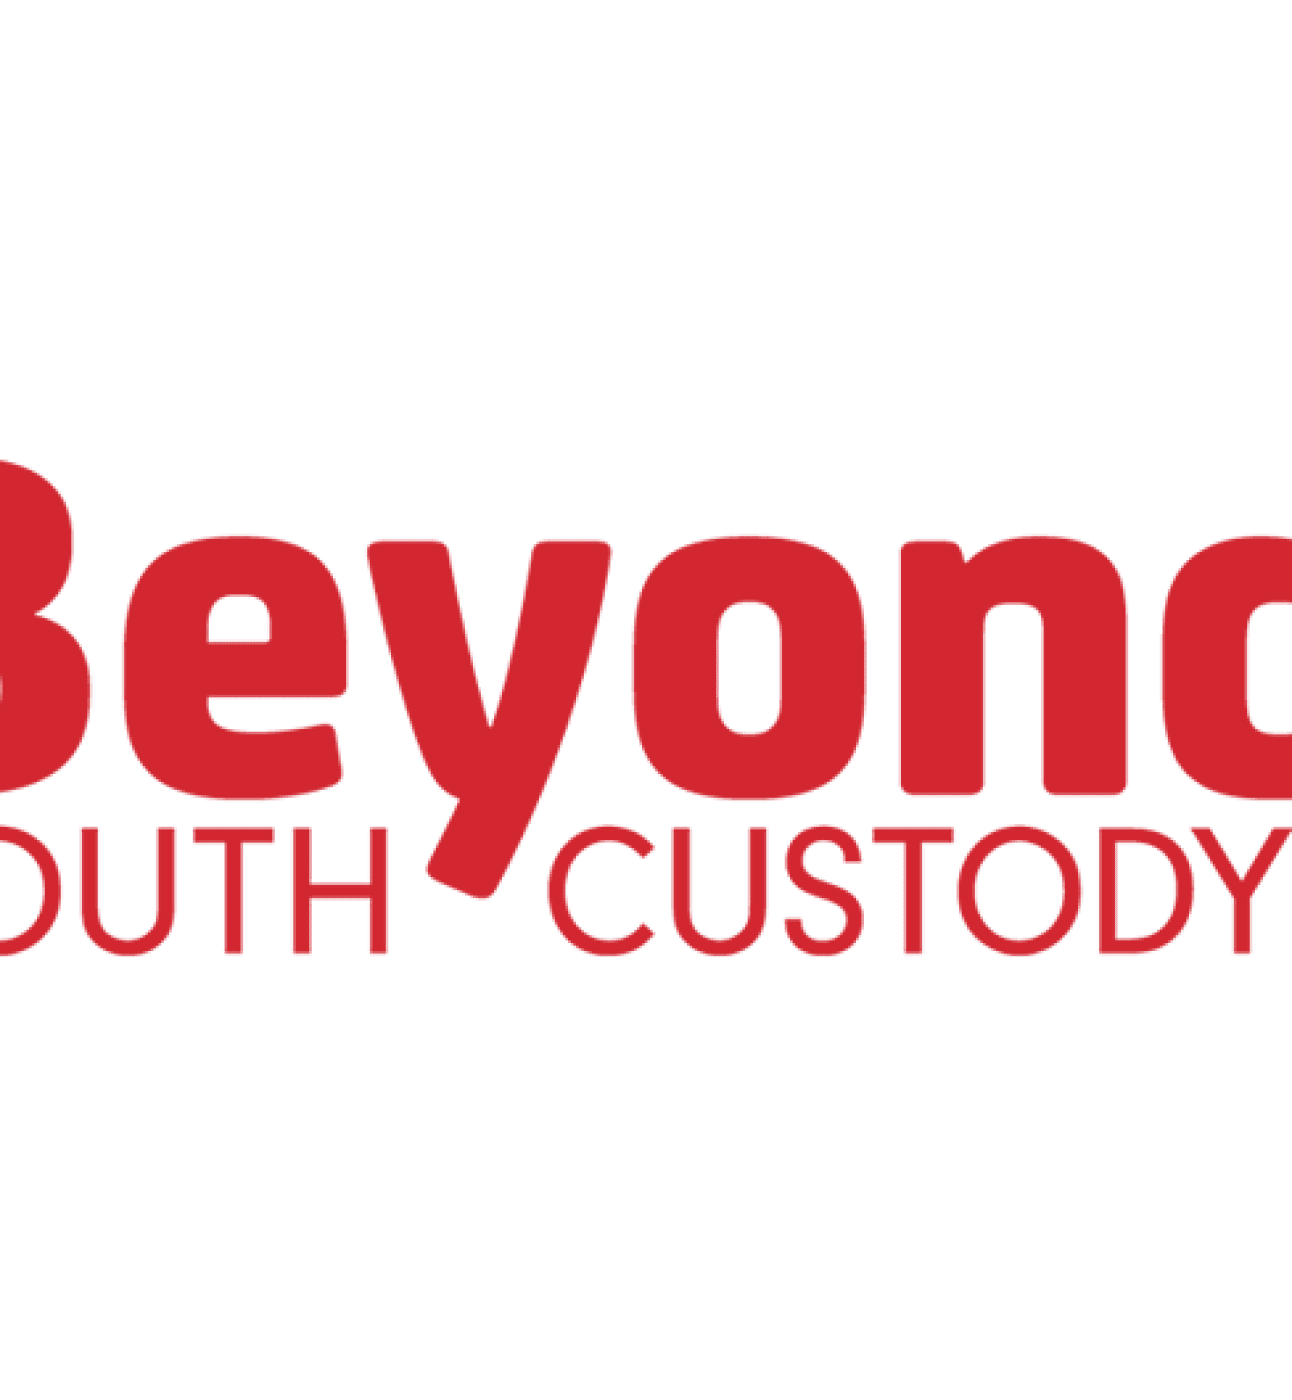 Beyond youth custody logo